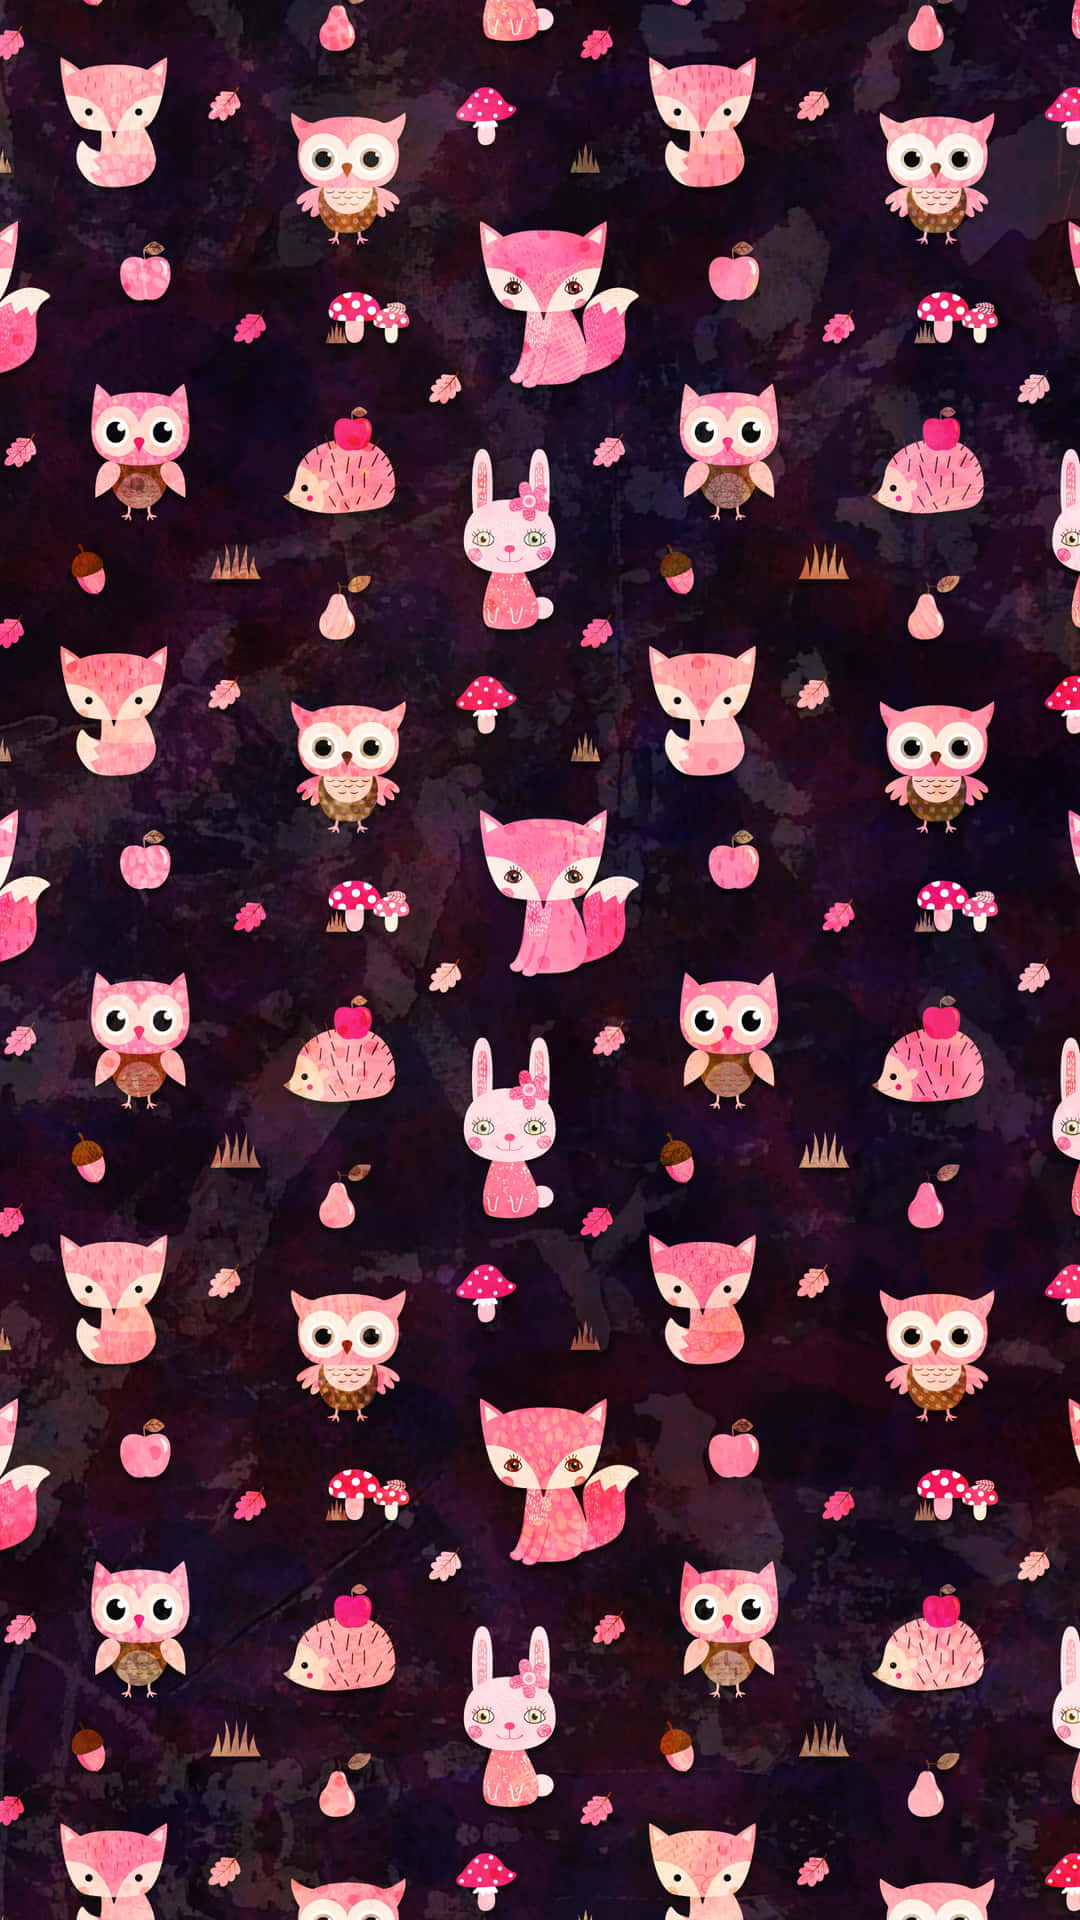 Cute and Adorable Kawaii Fox Illustration Wallpaper